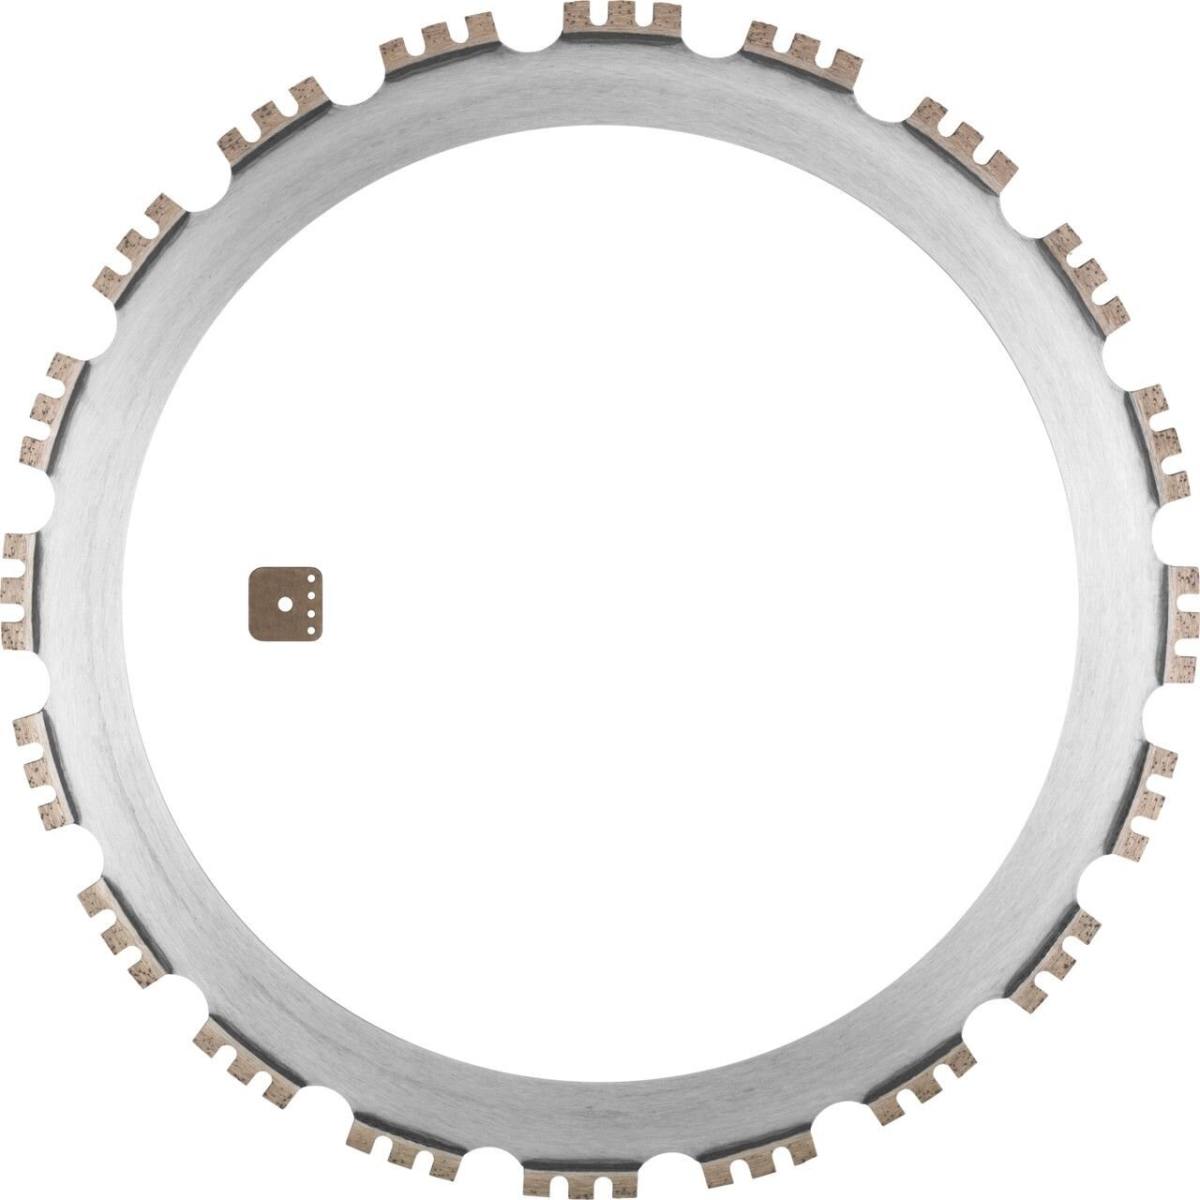 TYROLIT ring saw blade DxD/ExH 406x3.9/3.05x326.78 RSL-C | ?˜ 406 mm, shape: C1W, Art. 34058668